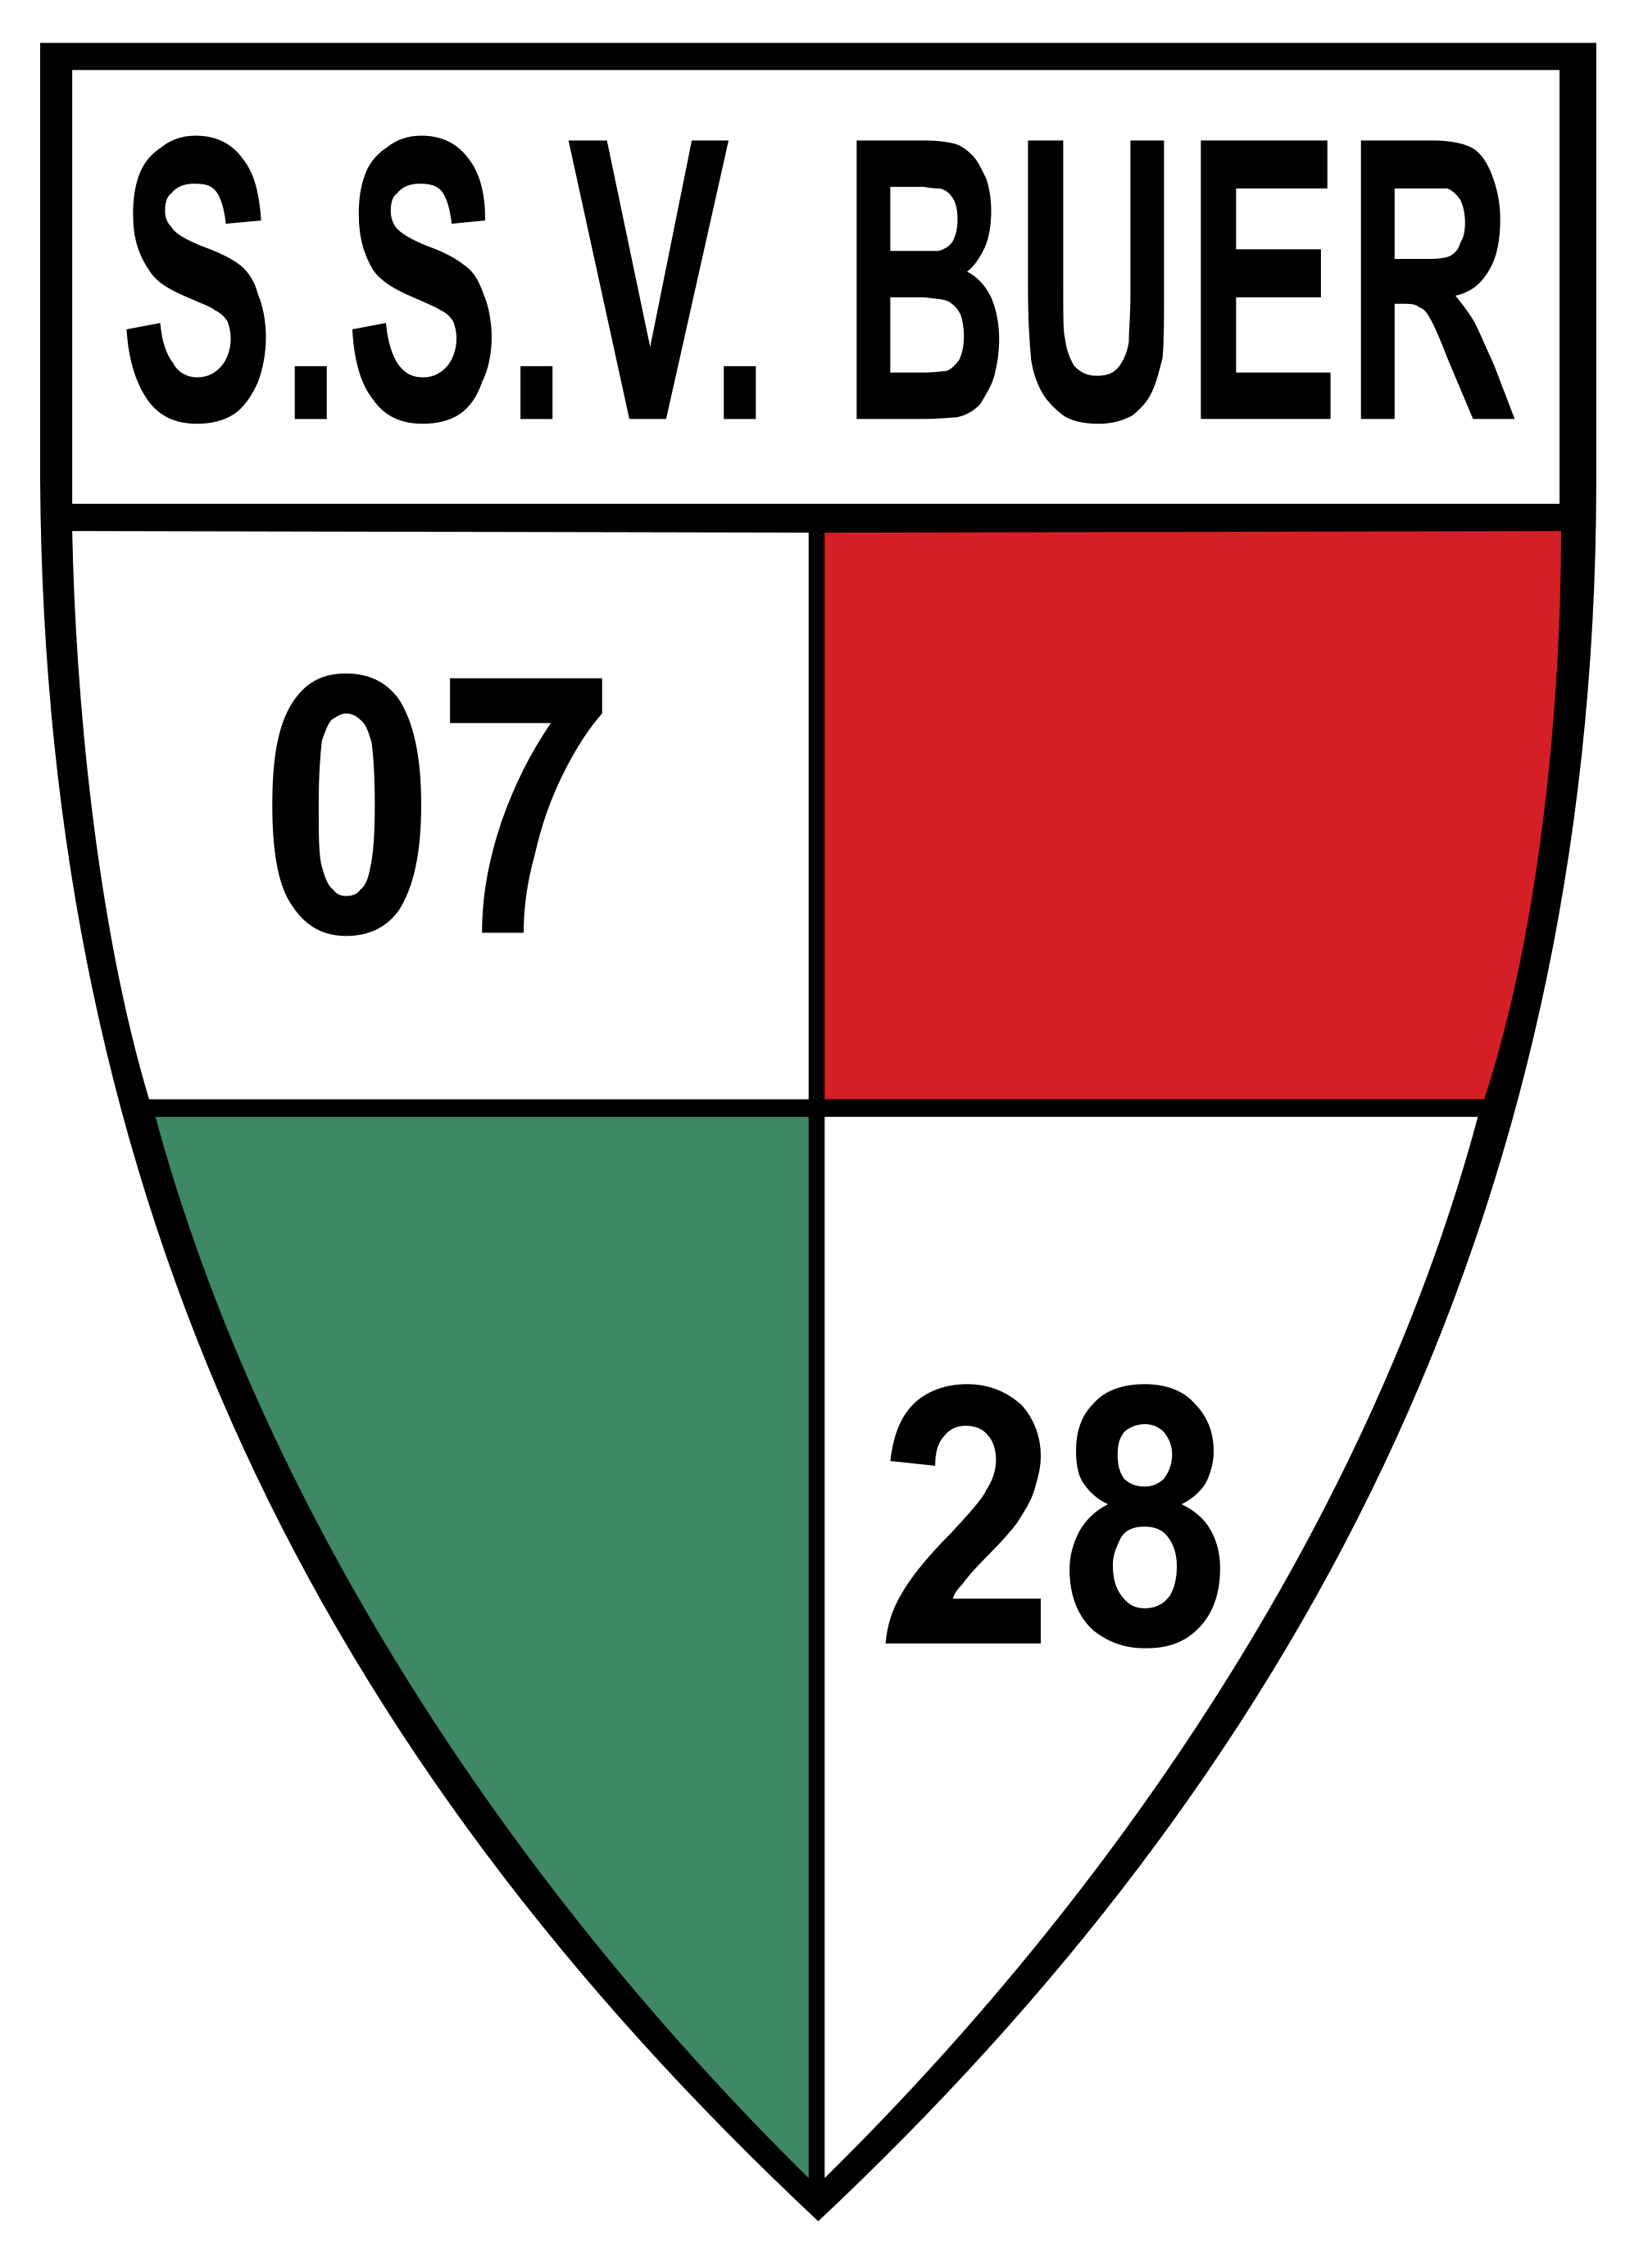 Wappen ehemals SSV Buer 07/28  39359